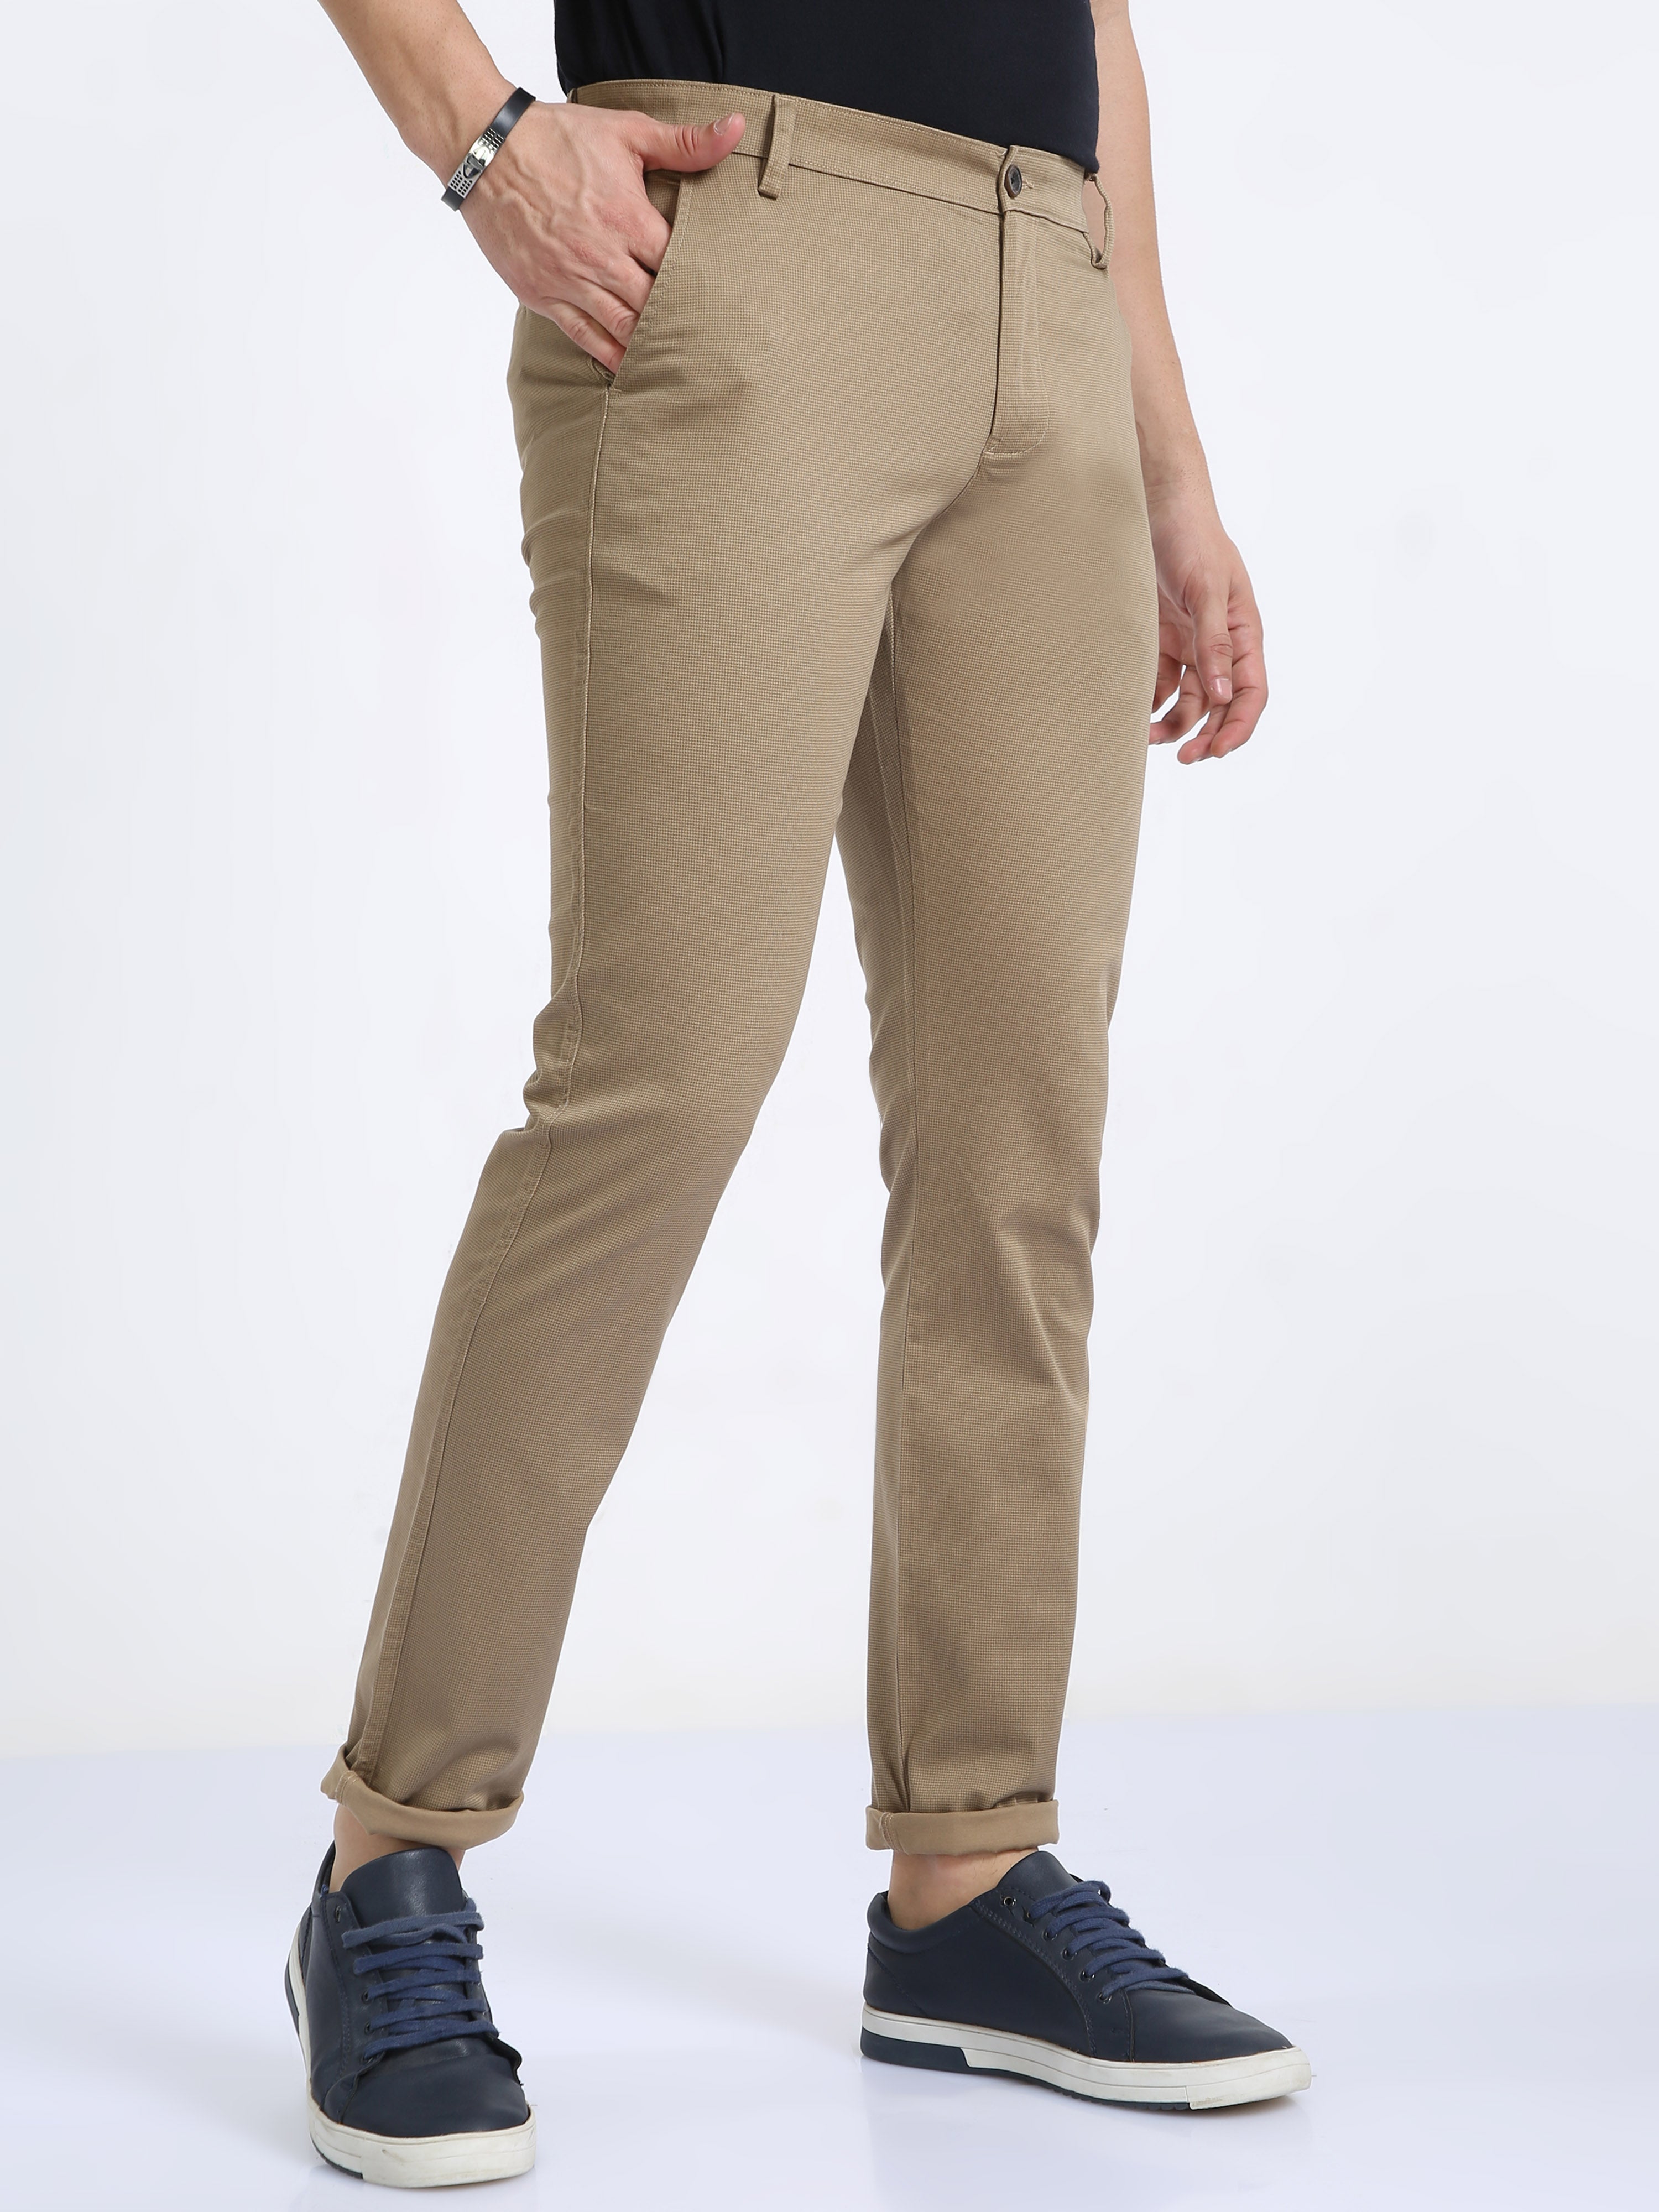 3 Colour Top Quality Trouser Pant For Man Office Trouser Men Business  Casual Pant British Social Club Outfits Pantalones Hombre - AliExpress